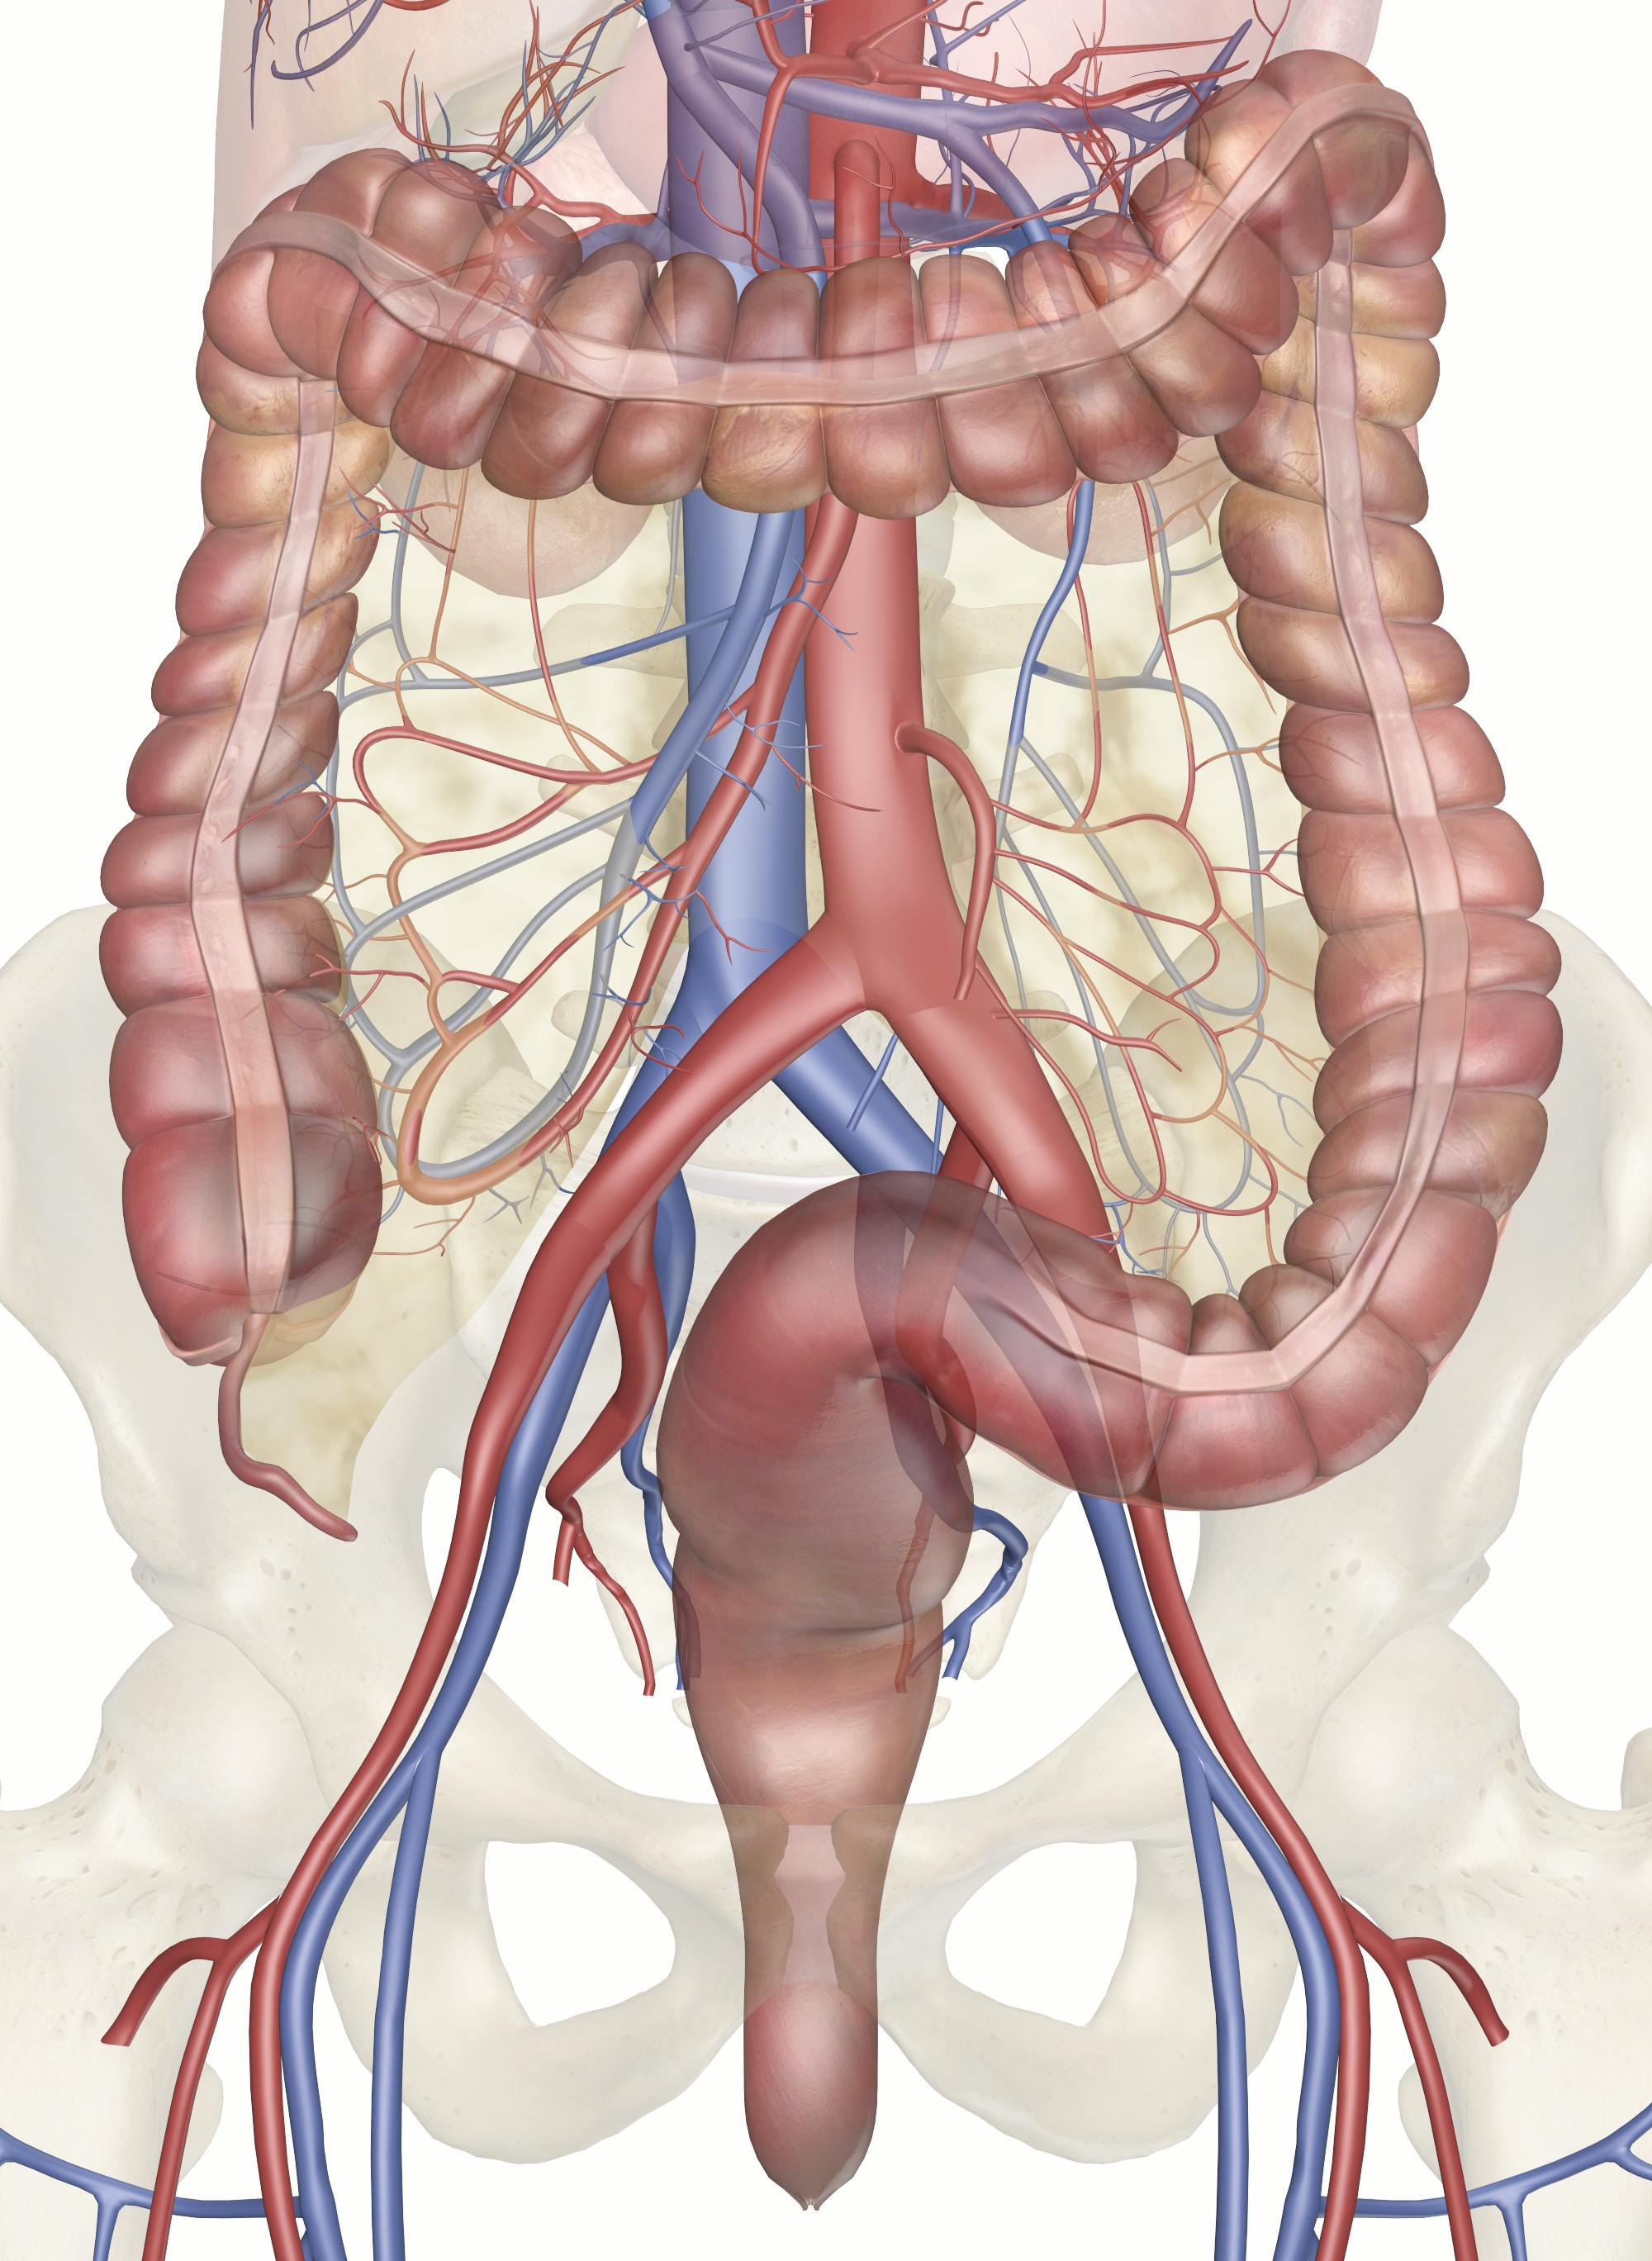 large intestine anatomy and physiology